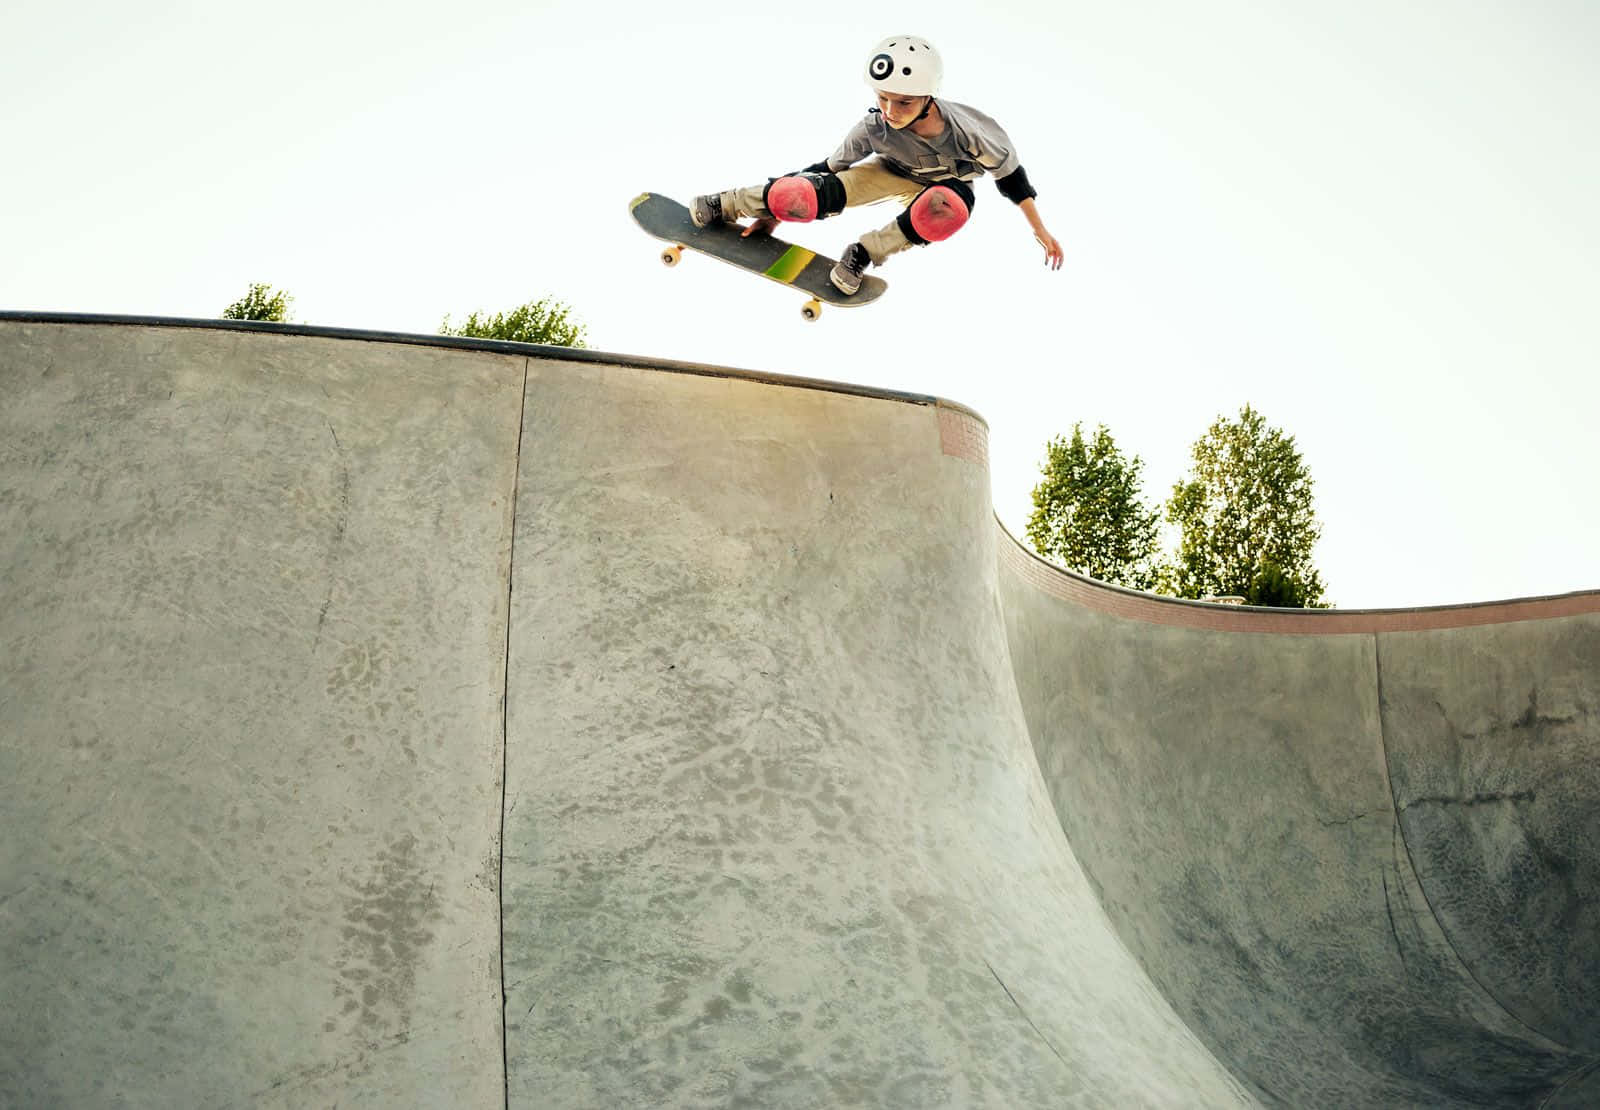 A Skateboarder Flying High